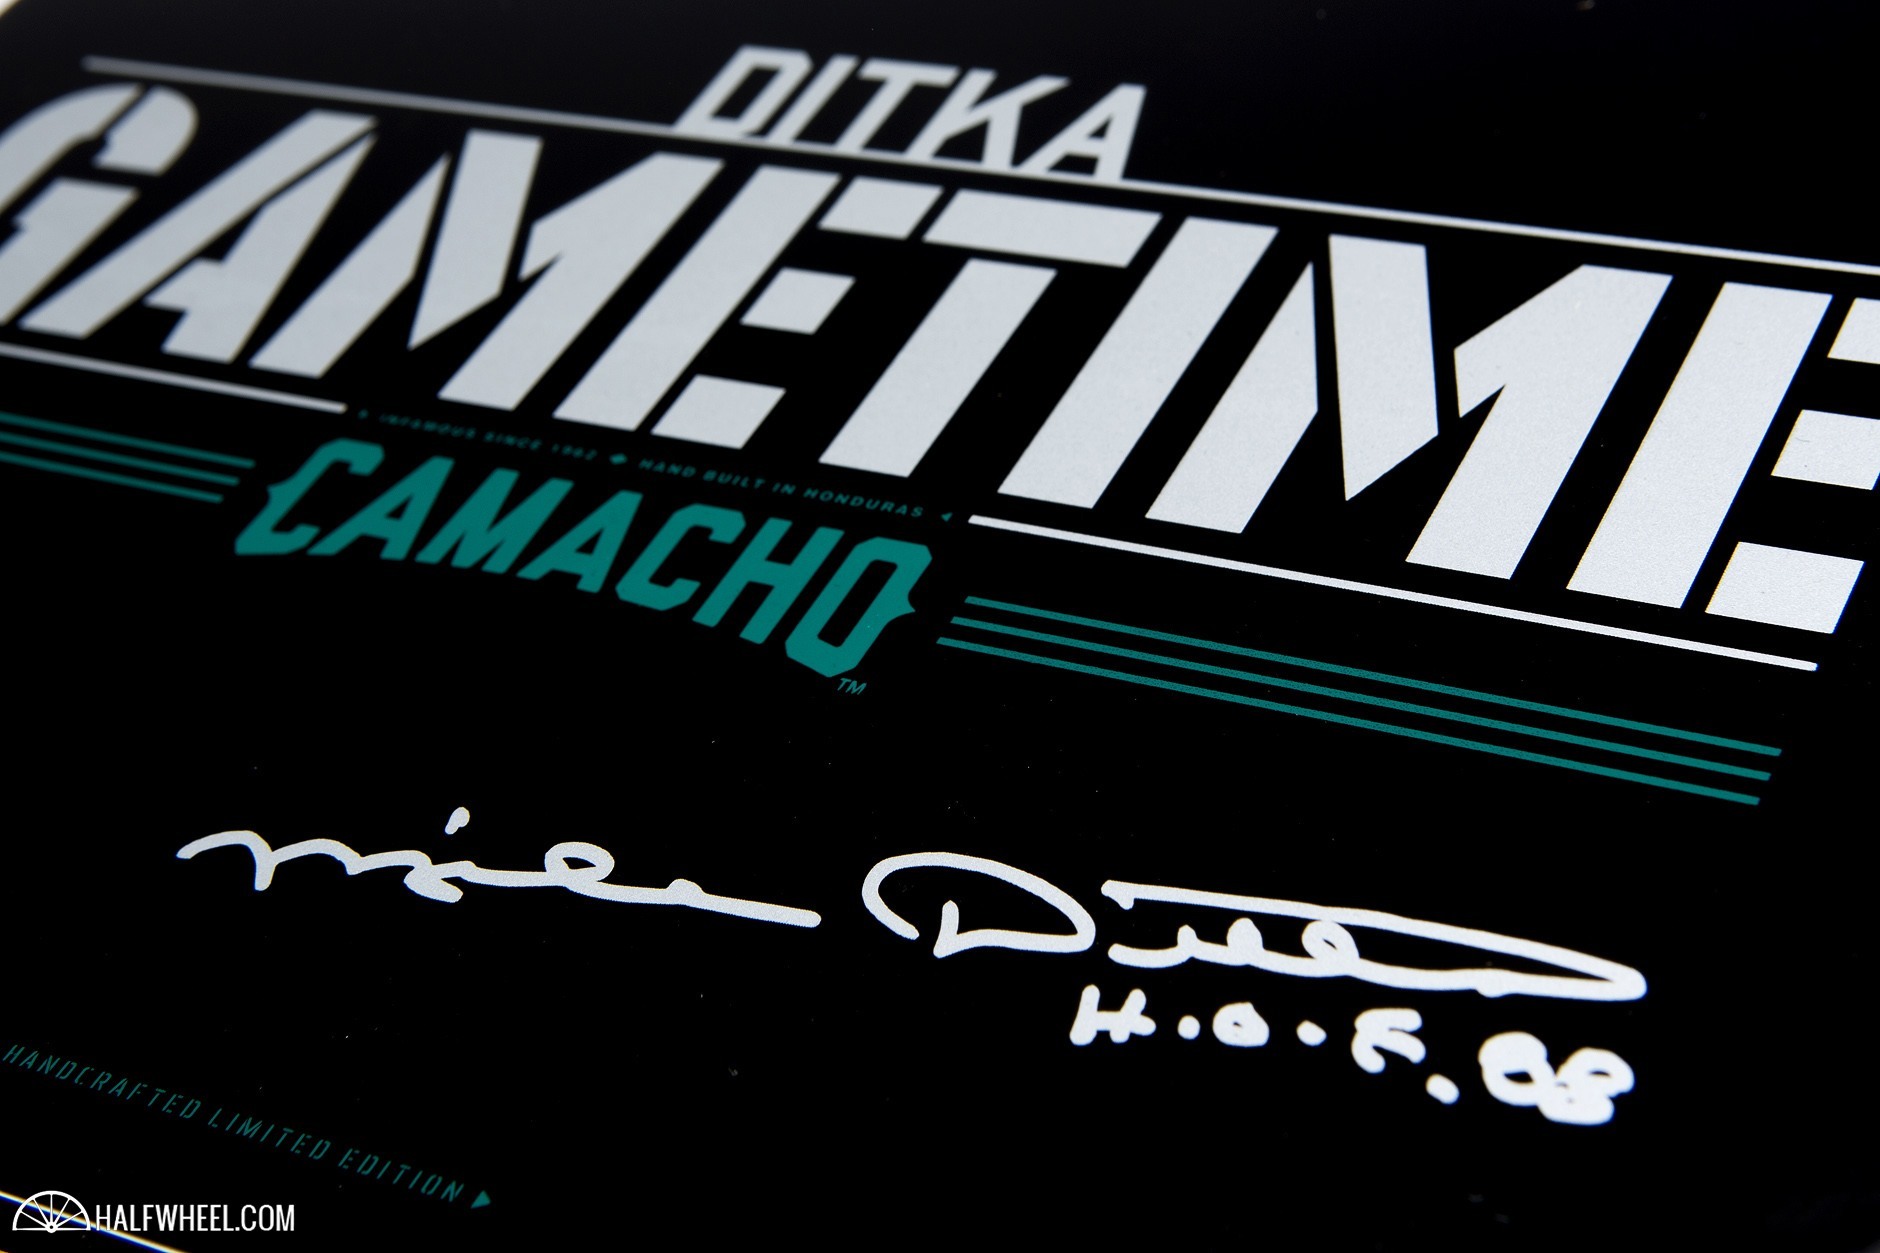 Ditka Gametime by Camacho Box 4